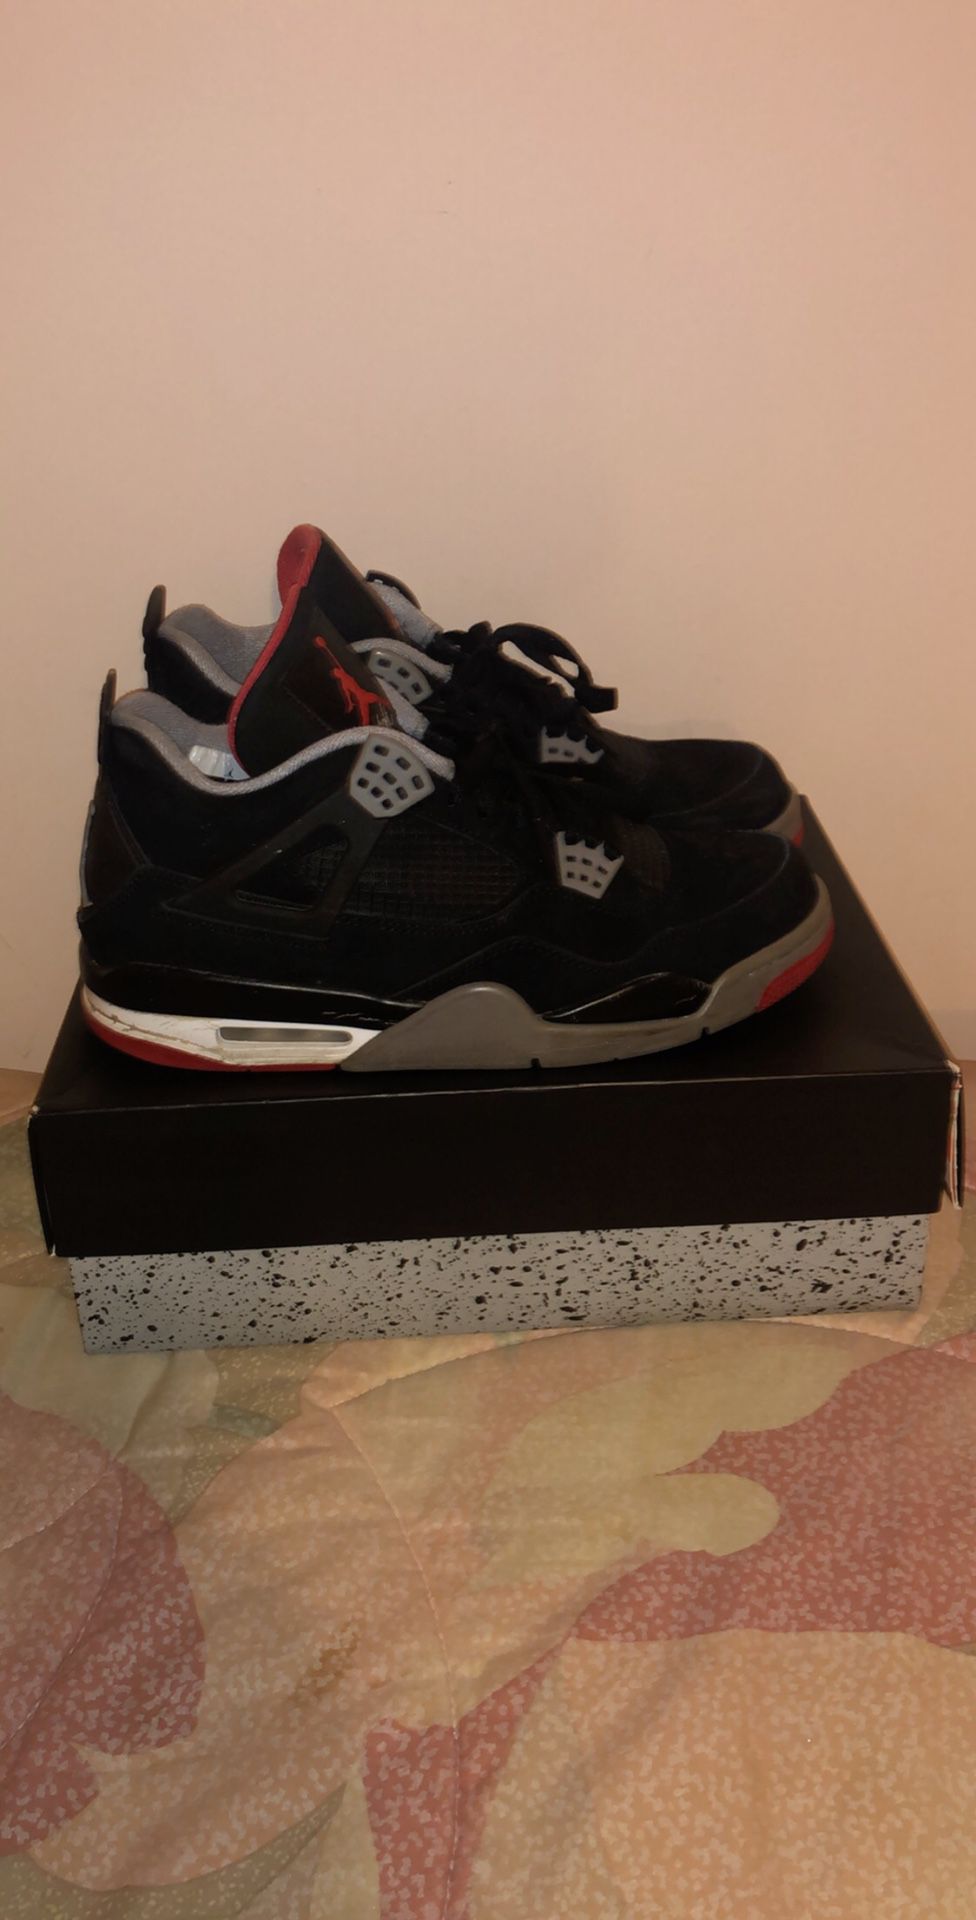 Jordan 4 Retro Black Cement 2012 Size 10